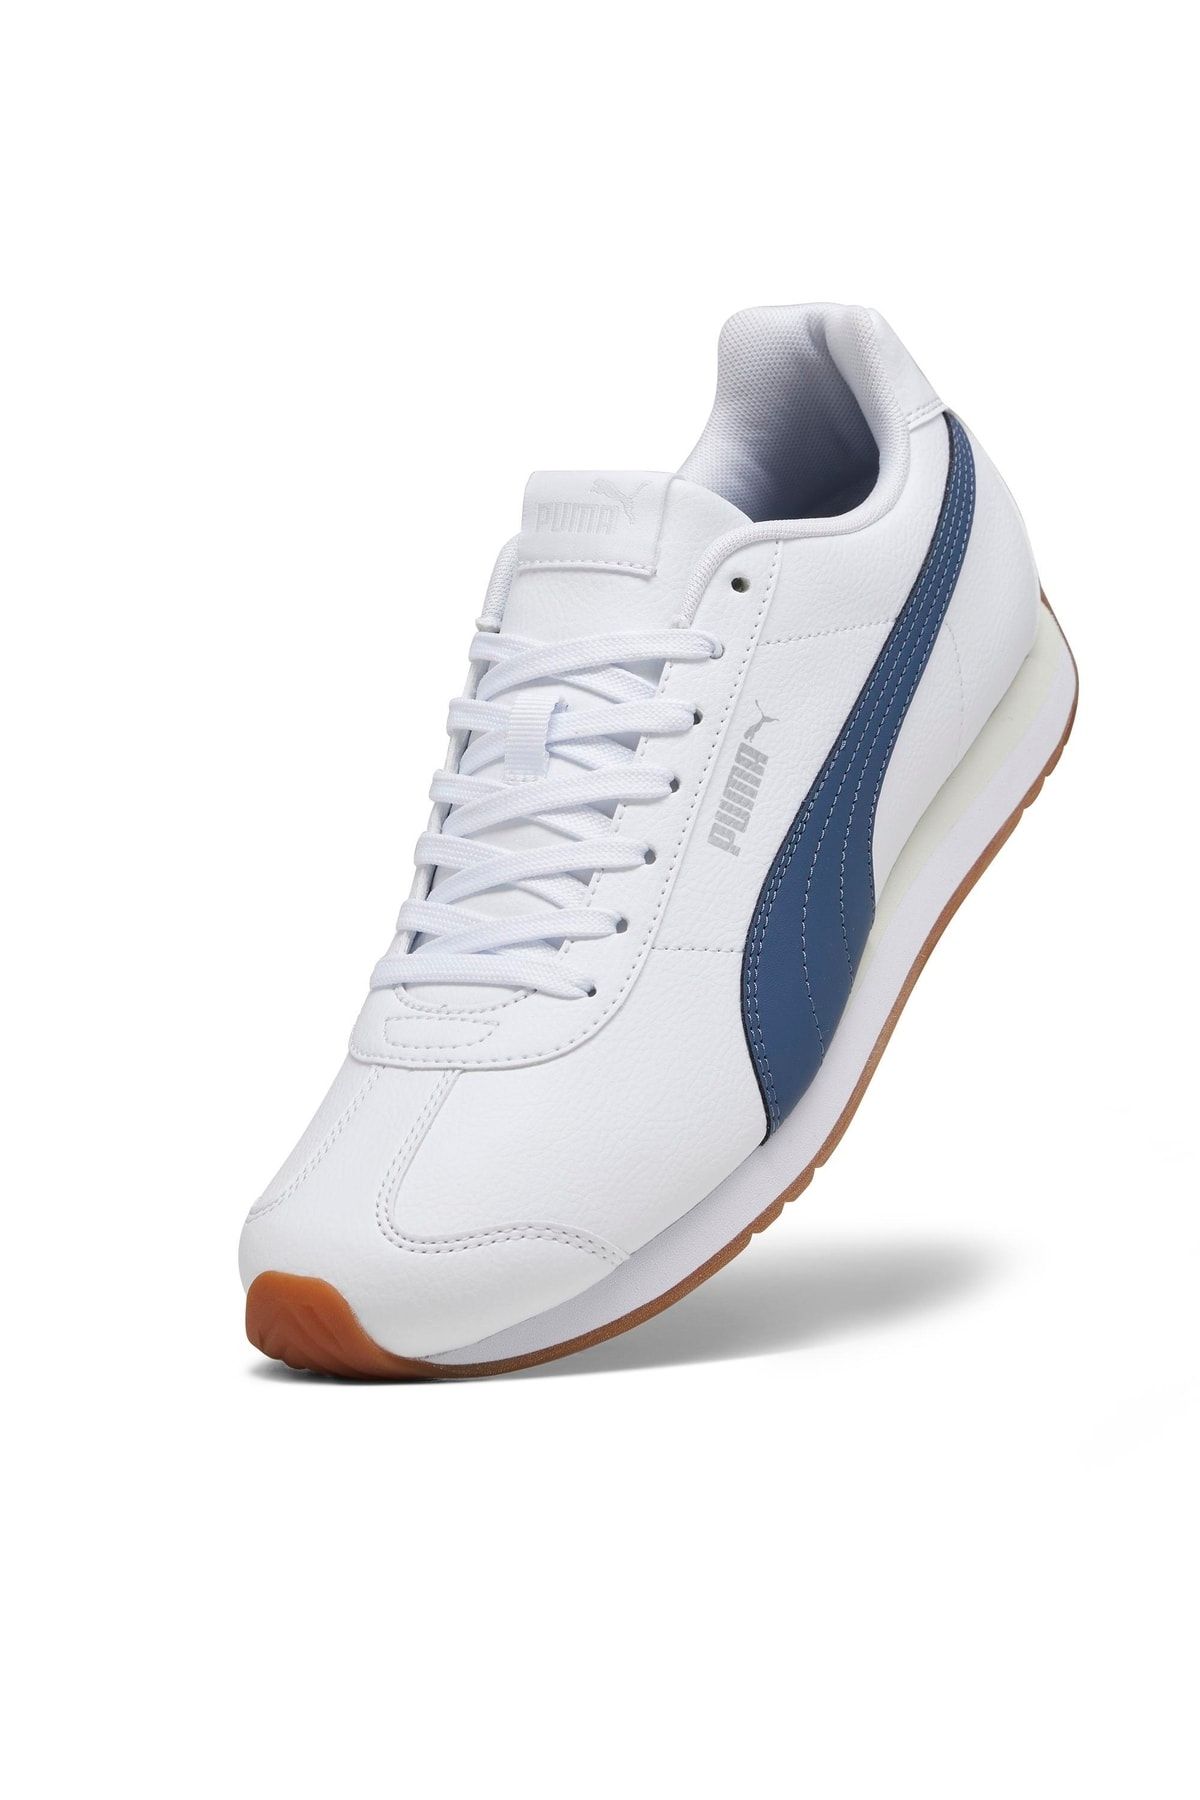 Buy Puma Unisex-Adult Turin II Puma White-Puma Black Sneaker - 4 UK  (36696204) at Amazon.in